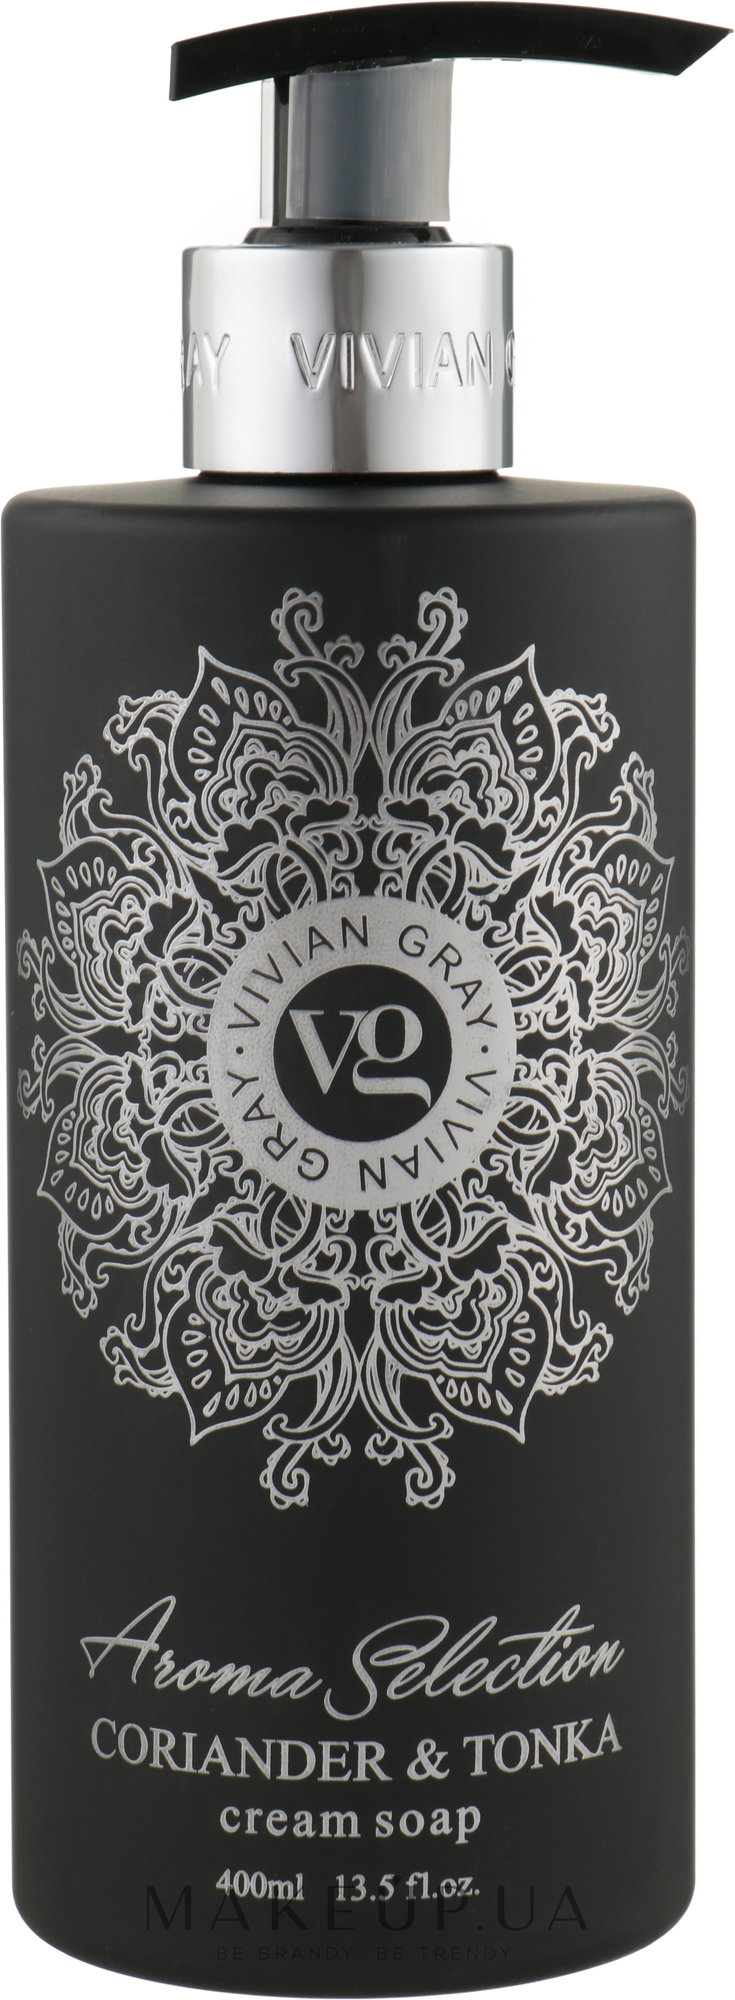 Жидкое крем-мыло - Vivian Gray Aroma Selection Coriander & Tonka Cream Soap — фото 400ml